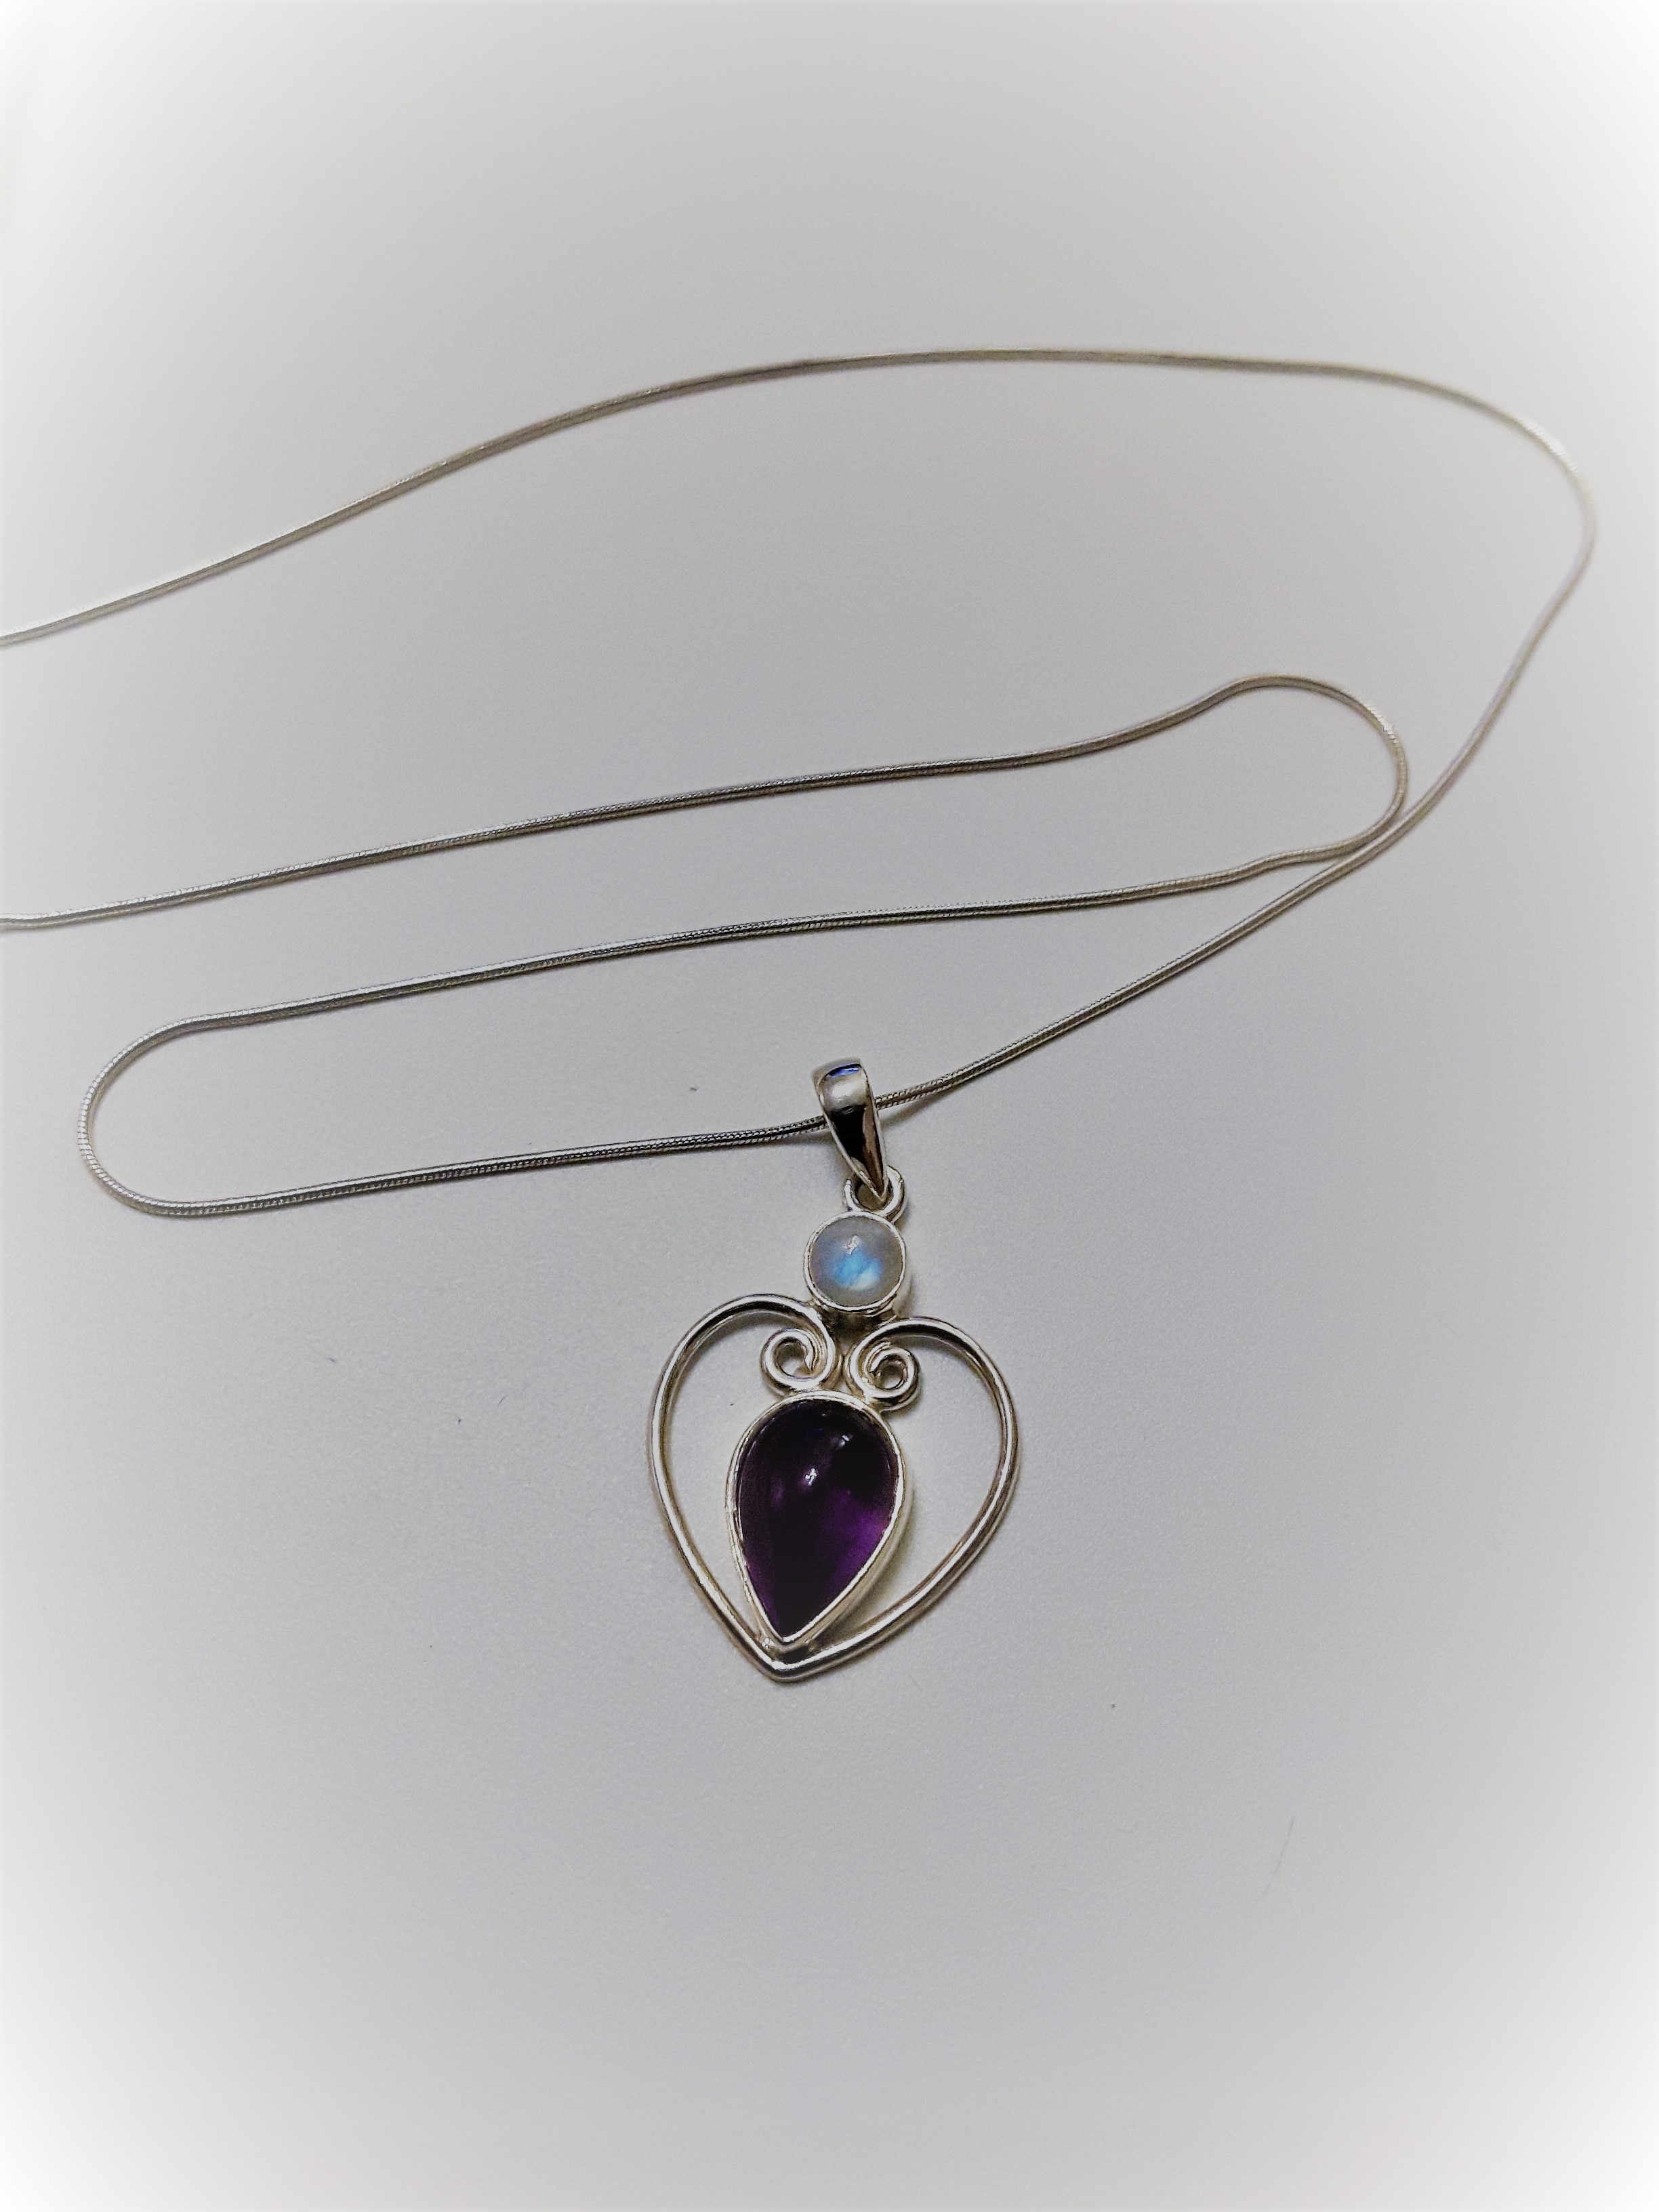 A Silver Amethyst & Opal Heart Shaped Pendant - Image 4 of 4